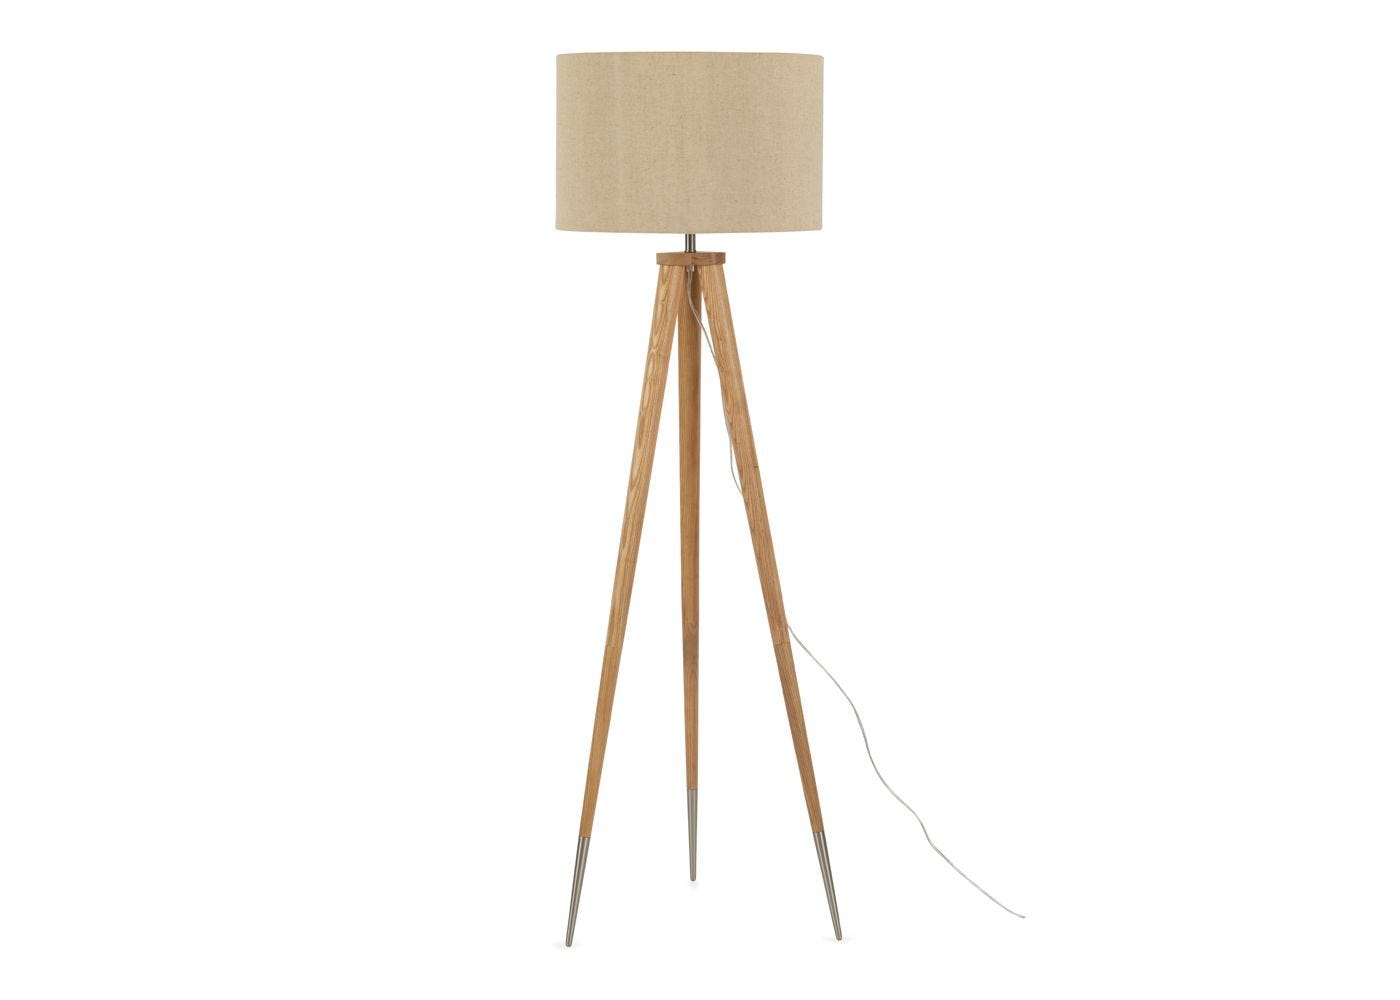 Hawkins Tripod Floor Lamp With Shade, Tripod Table Lamp Wooden